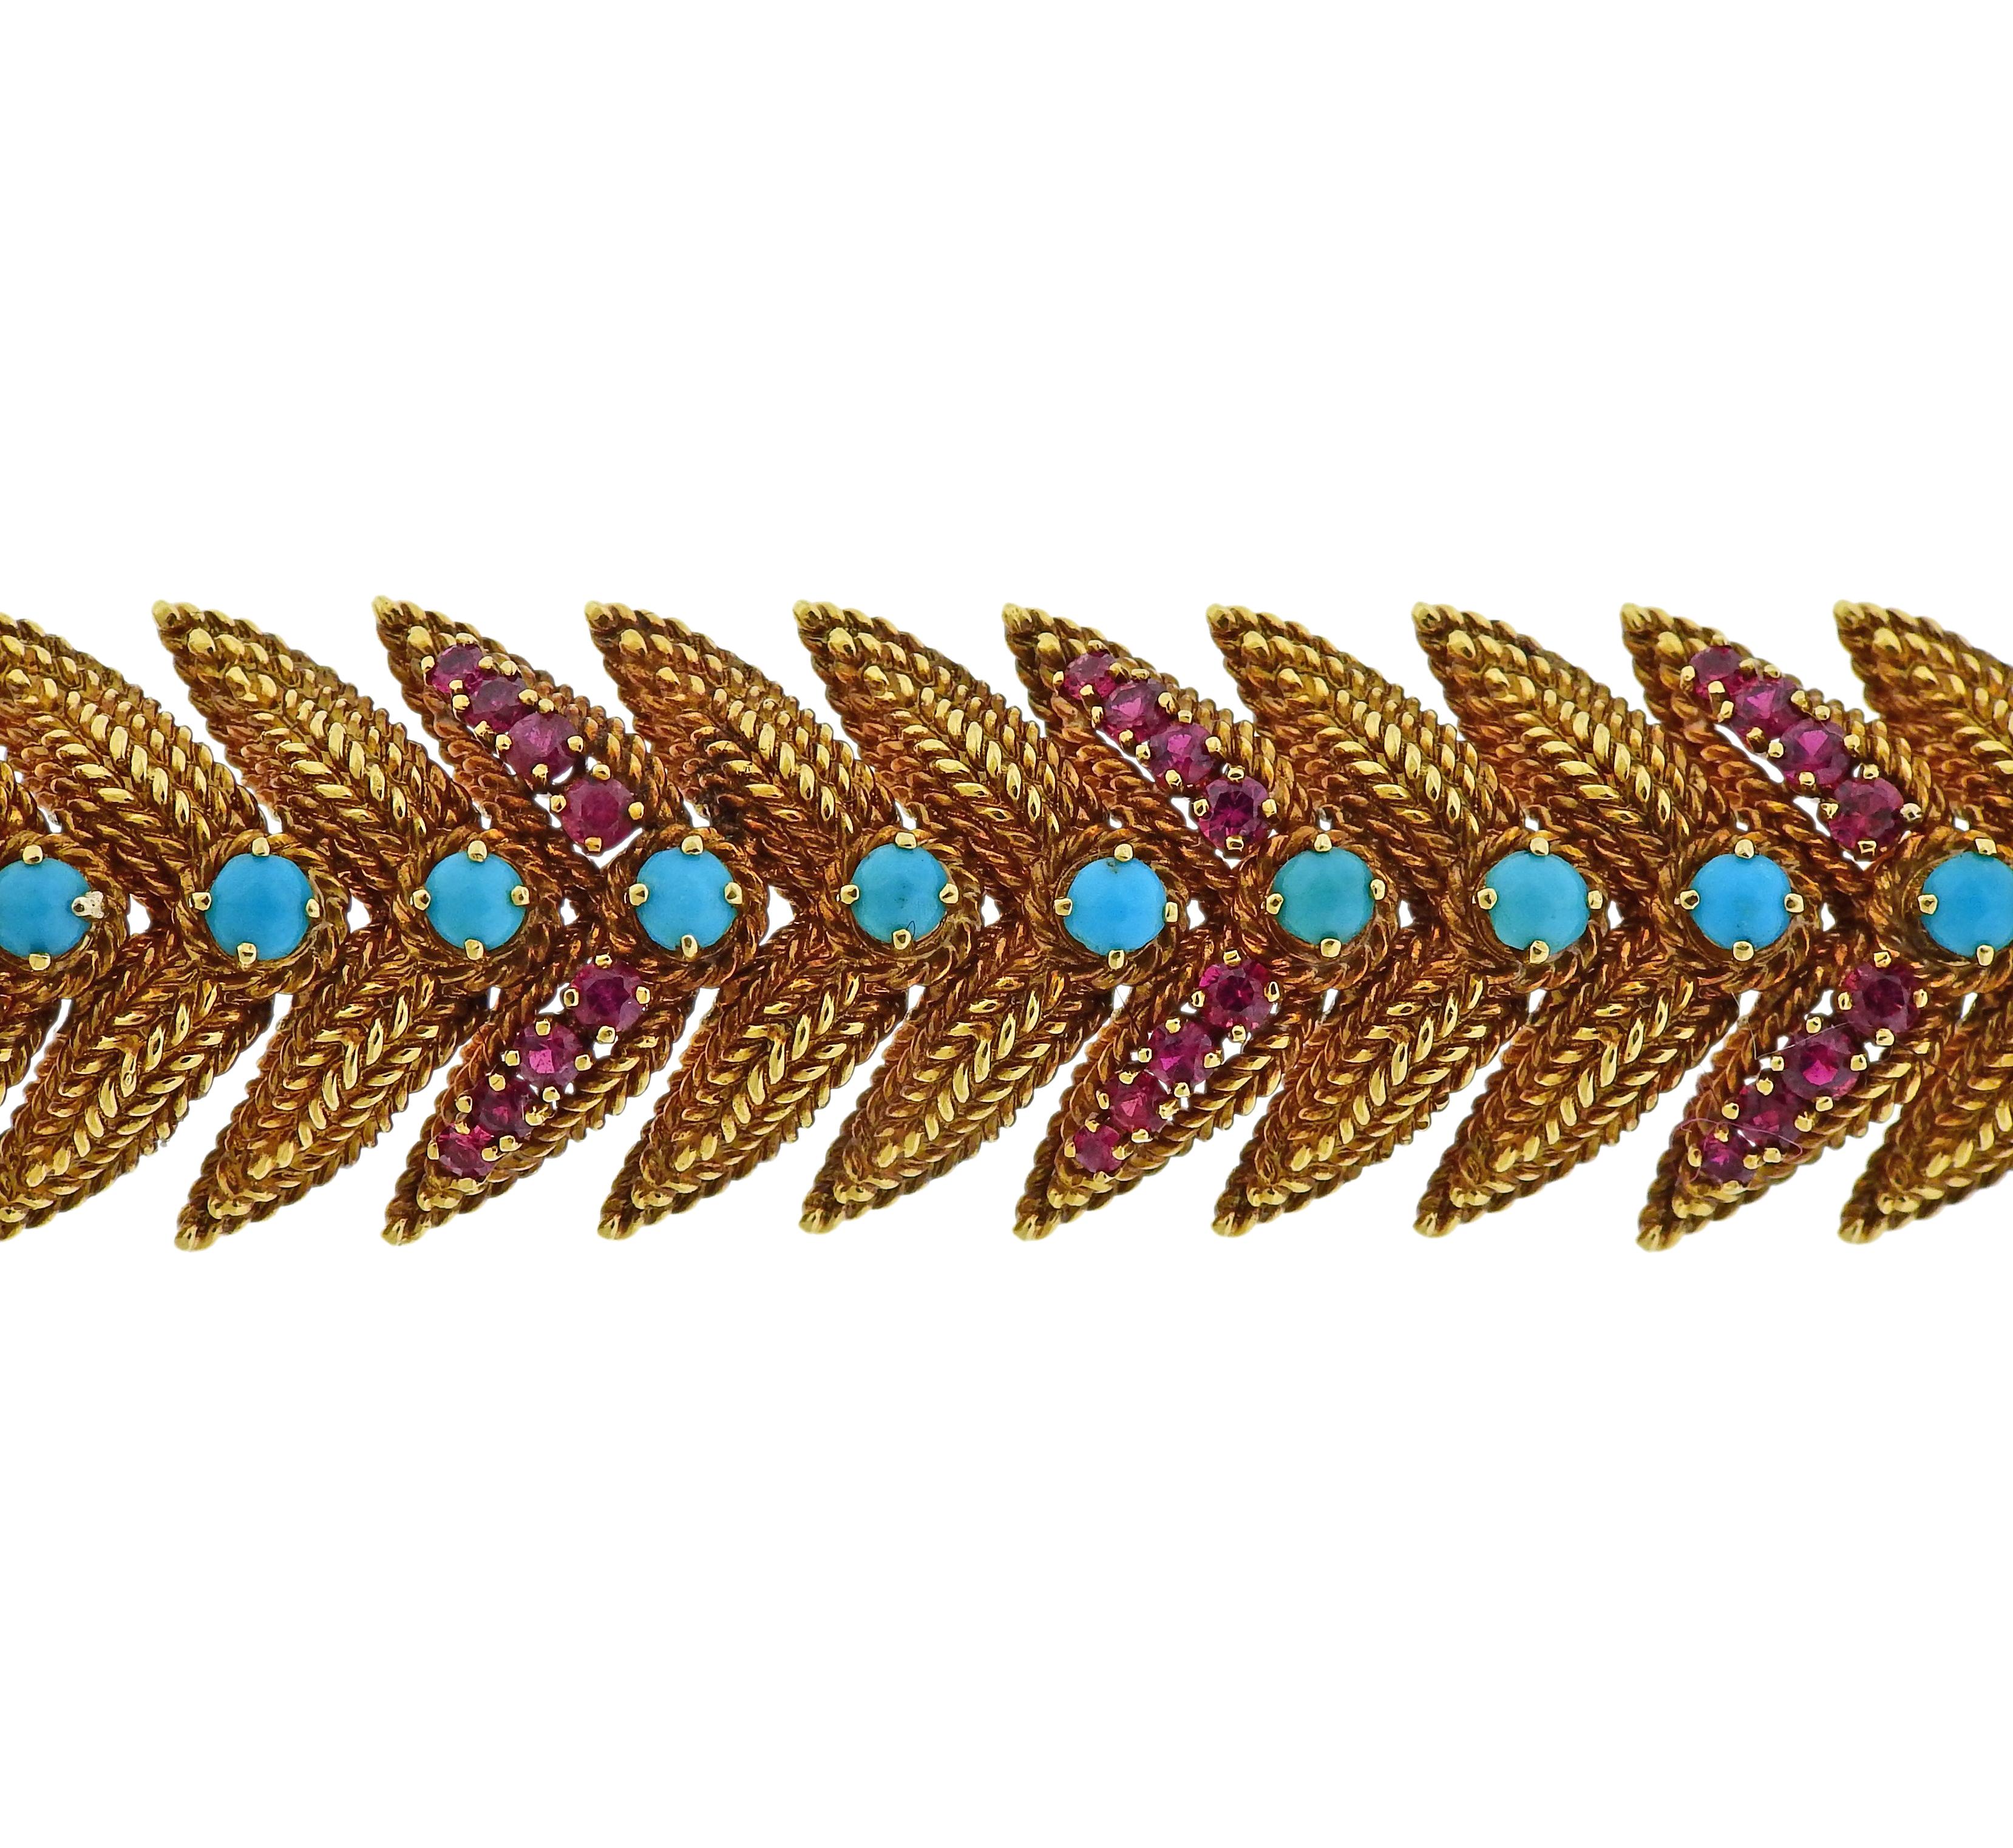 Vintage circa 1960s 18k gold leaf motif bracelet, set with turquoise and rubies. The bracelet is 7.25